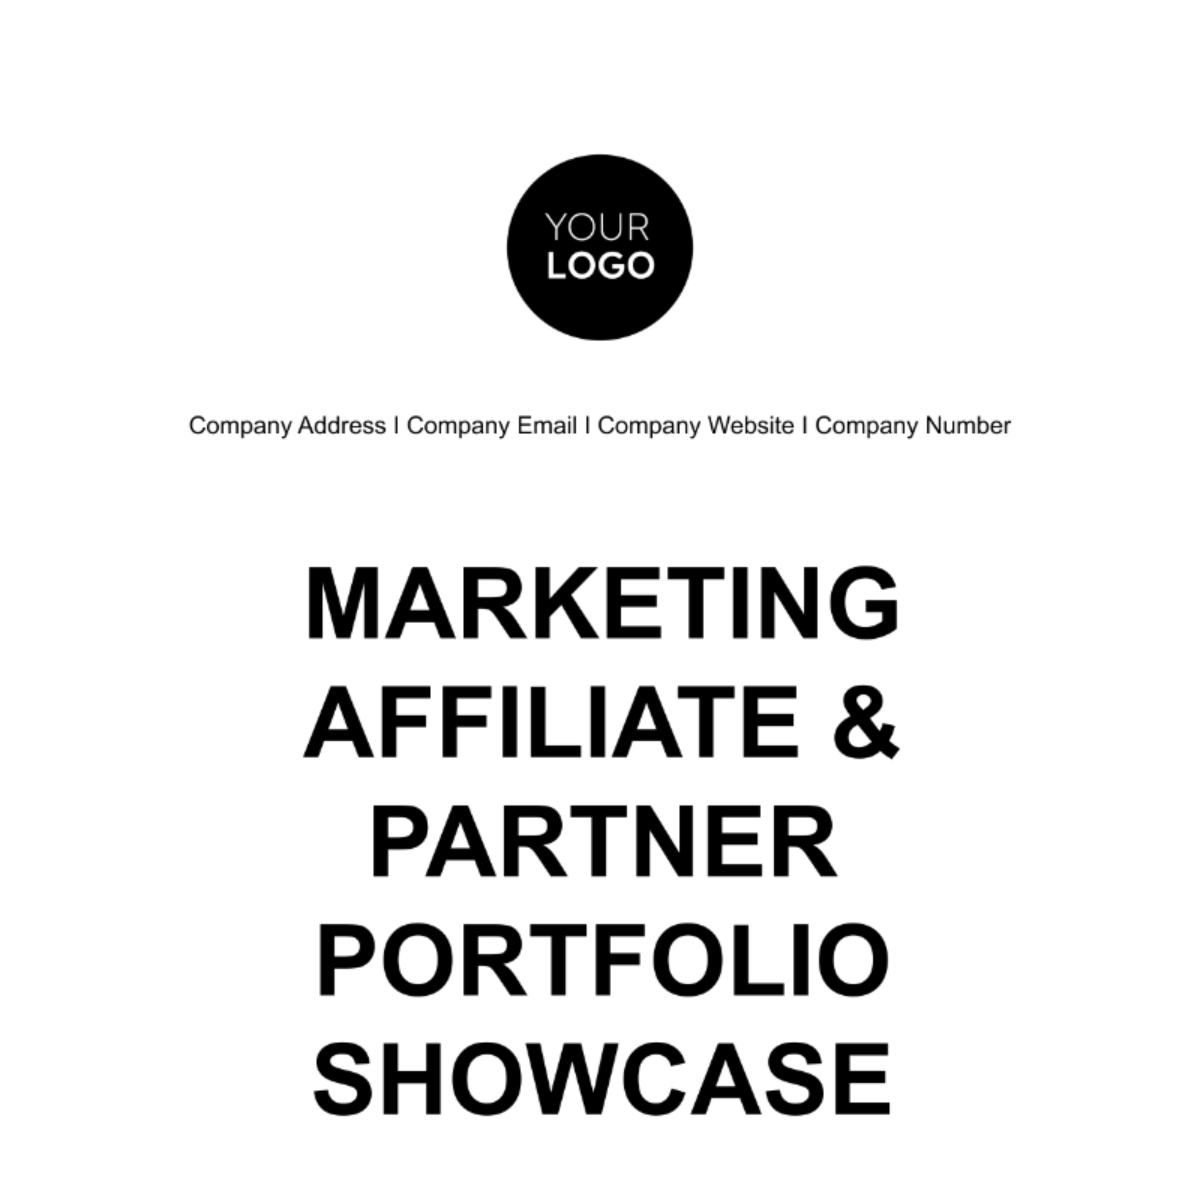 Marketing Affiliate & Partner Portfolio Showcase Template